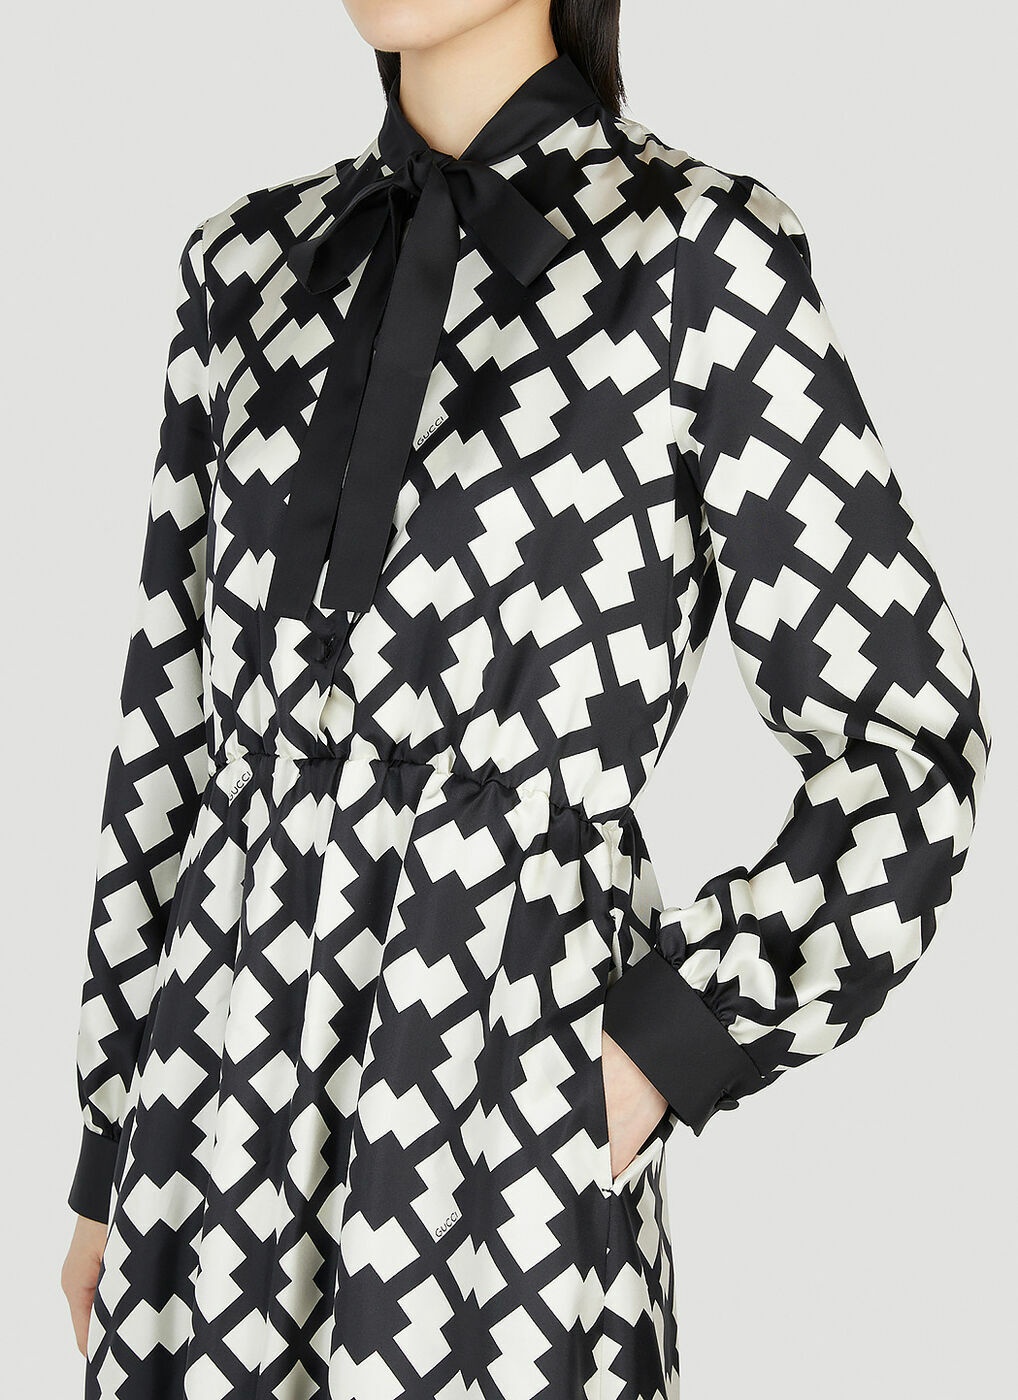 Gucci - Rhombus Tile Dress in Black Gucci